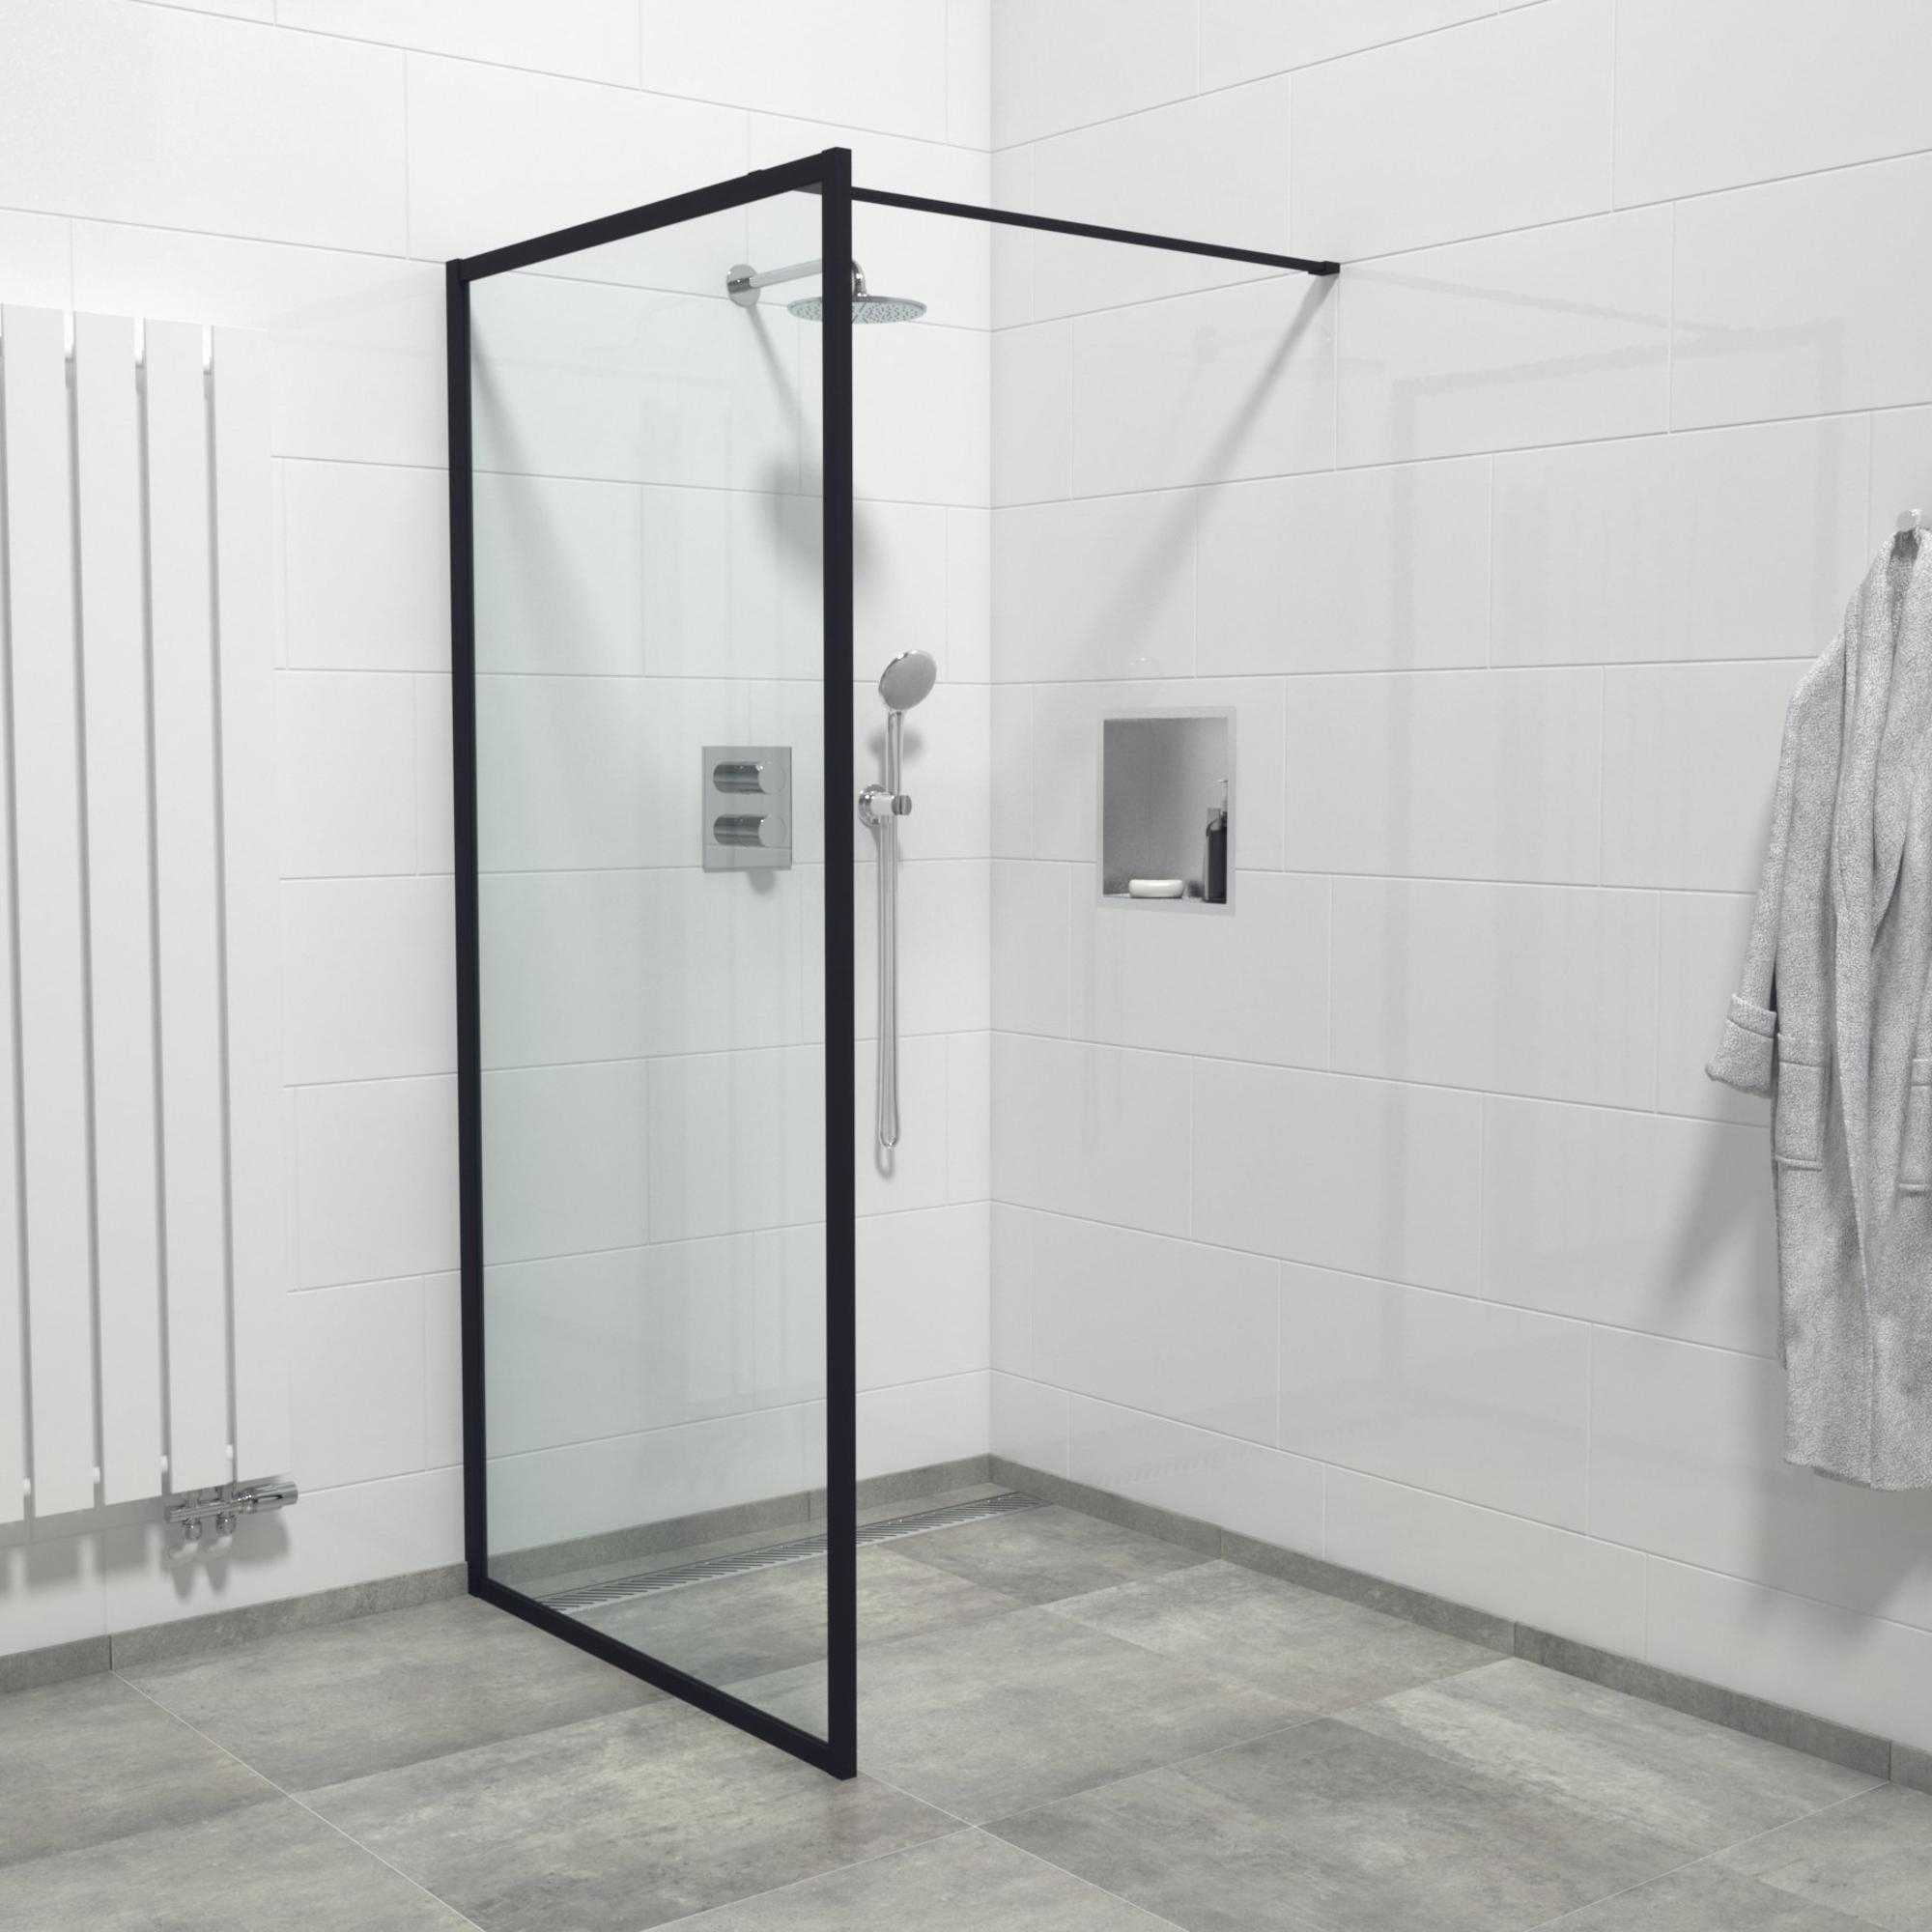 277 photos de salle de bain avec douche italienne